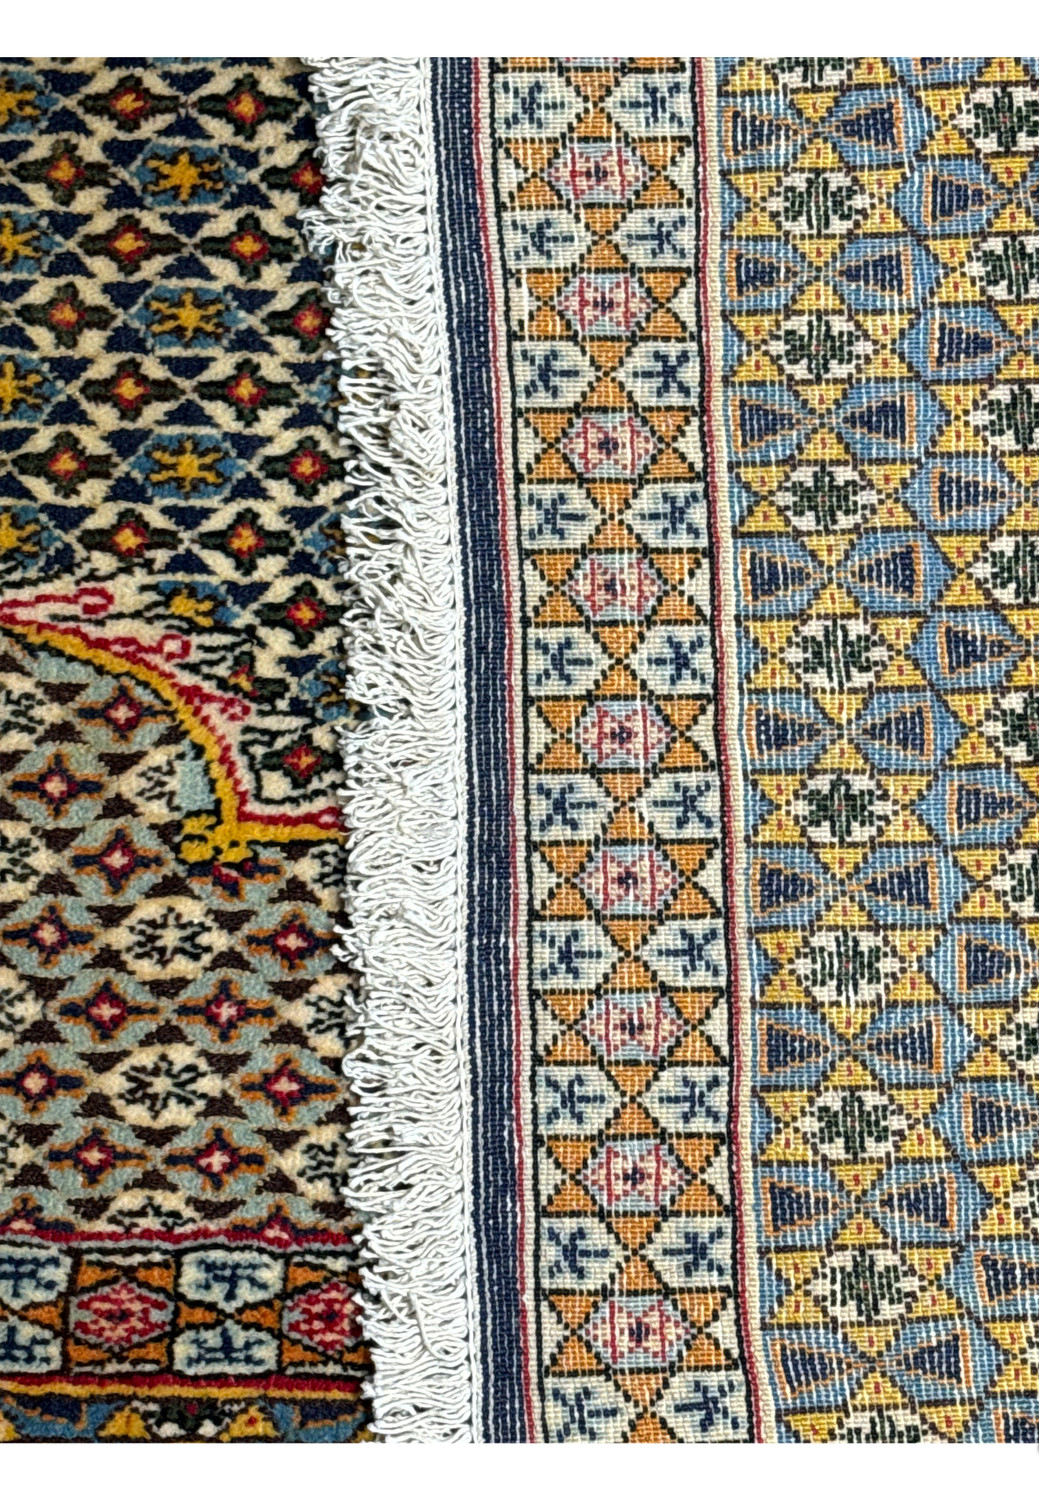 Lush fringe detail of Persian Qum Rug, exemplifying luxury kork and silk blend